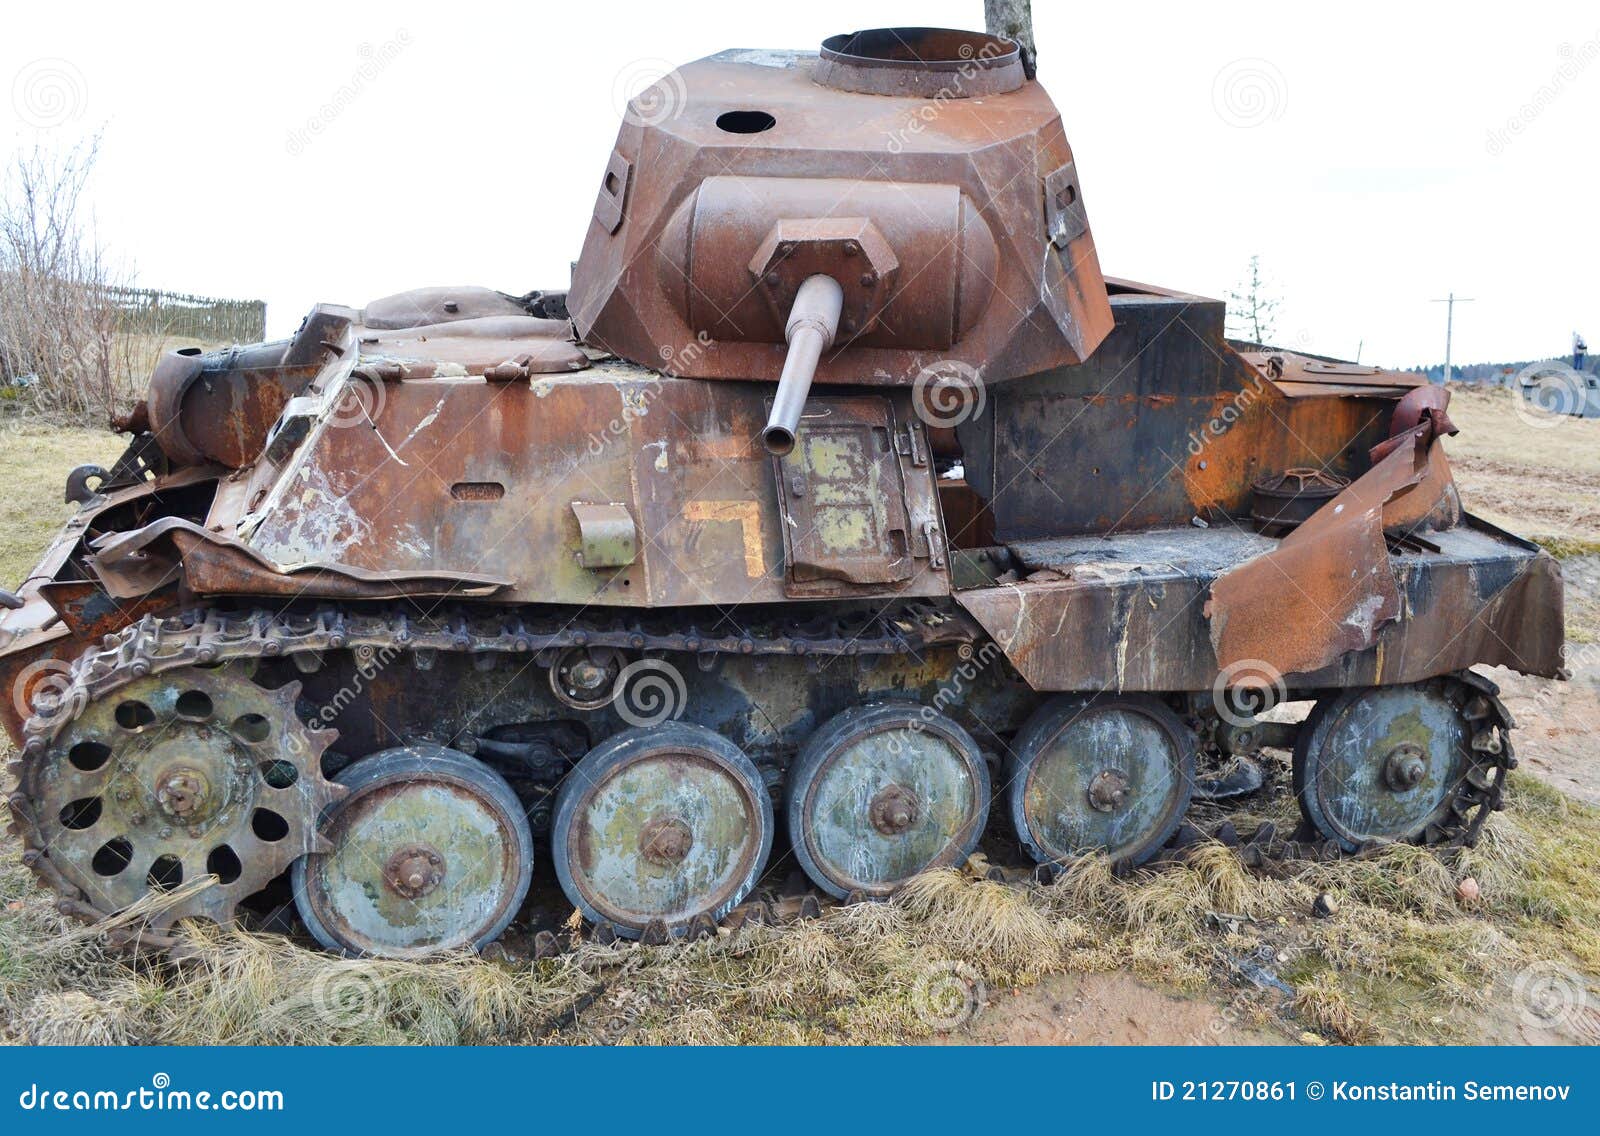 rusty-old-german-military-tank-21270861.jpg